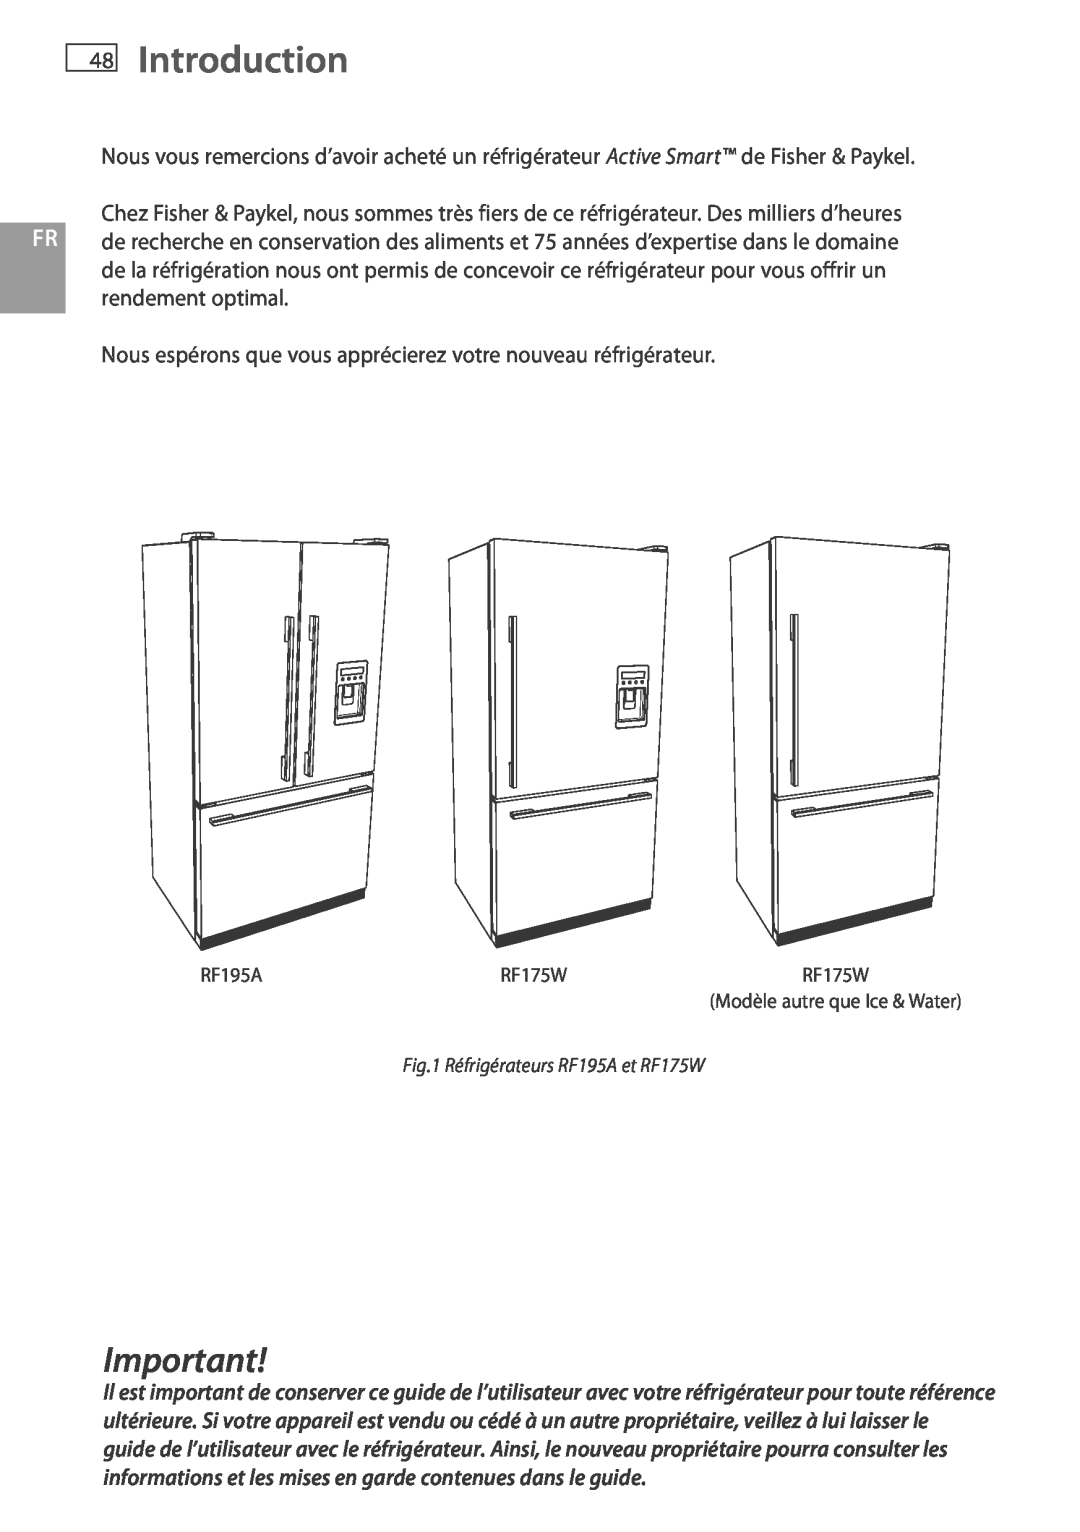 Fisher & Paykel installation instructions 48Introduction, Réfrigérateurs RF195A et RF175W 